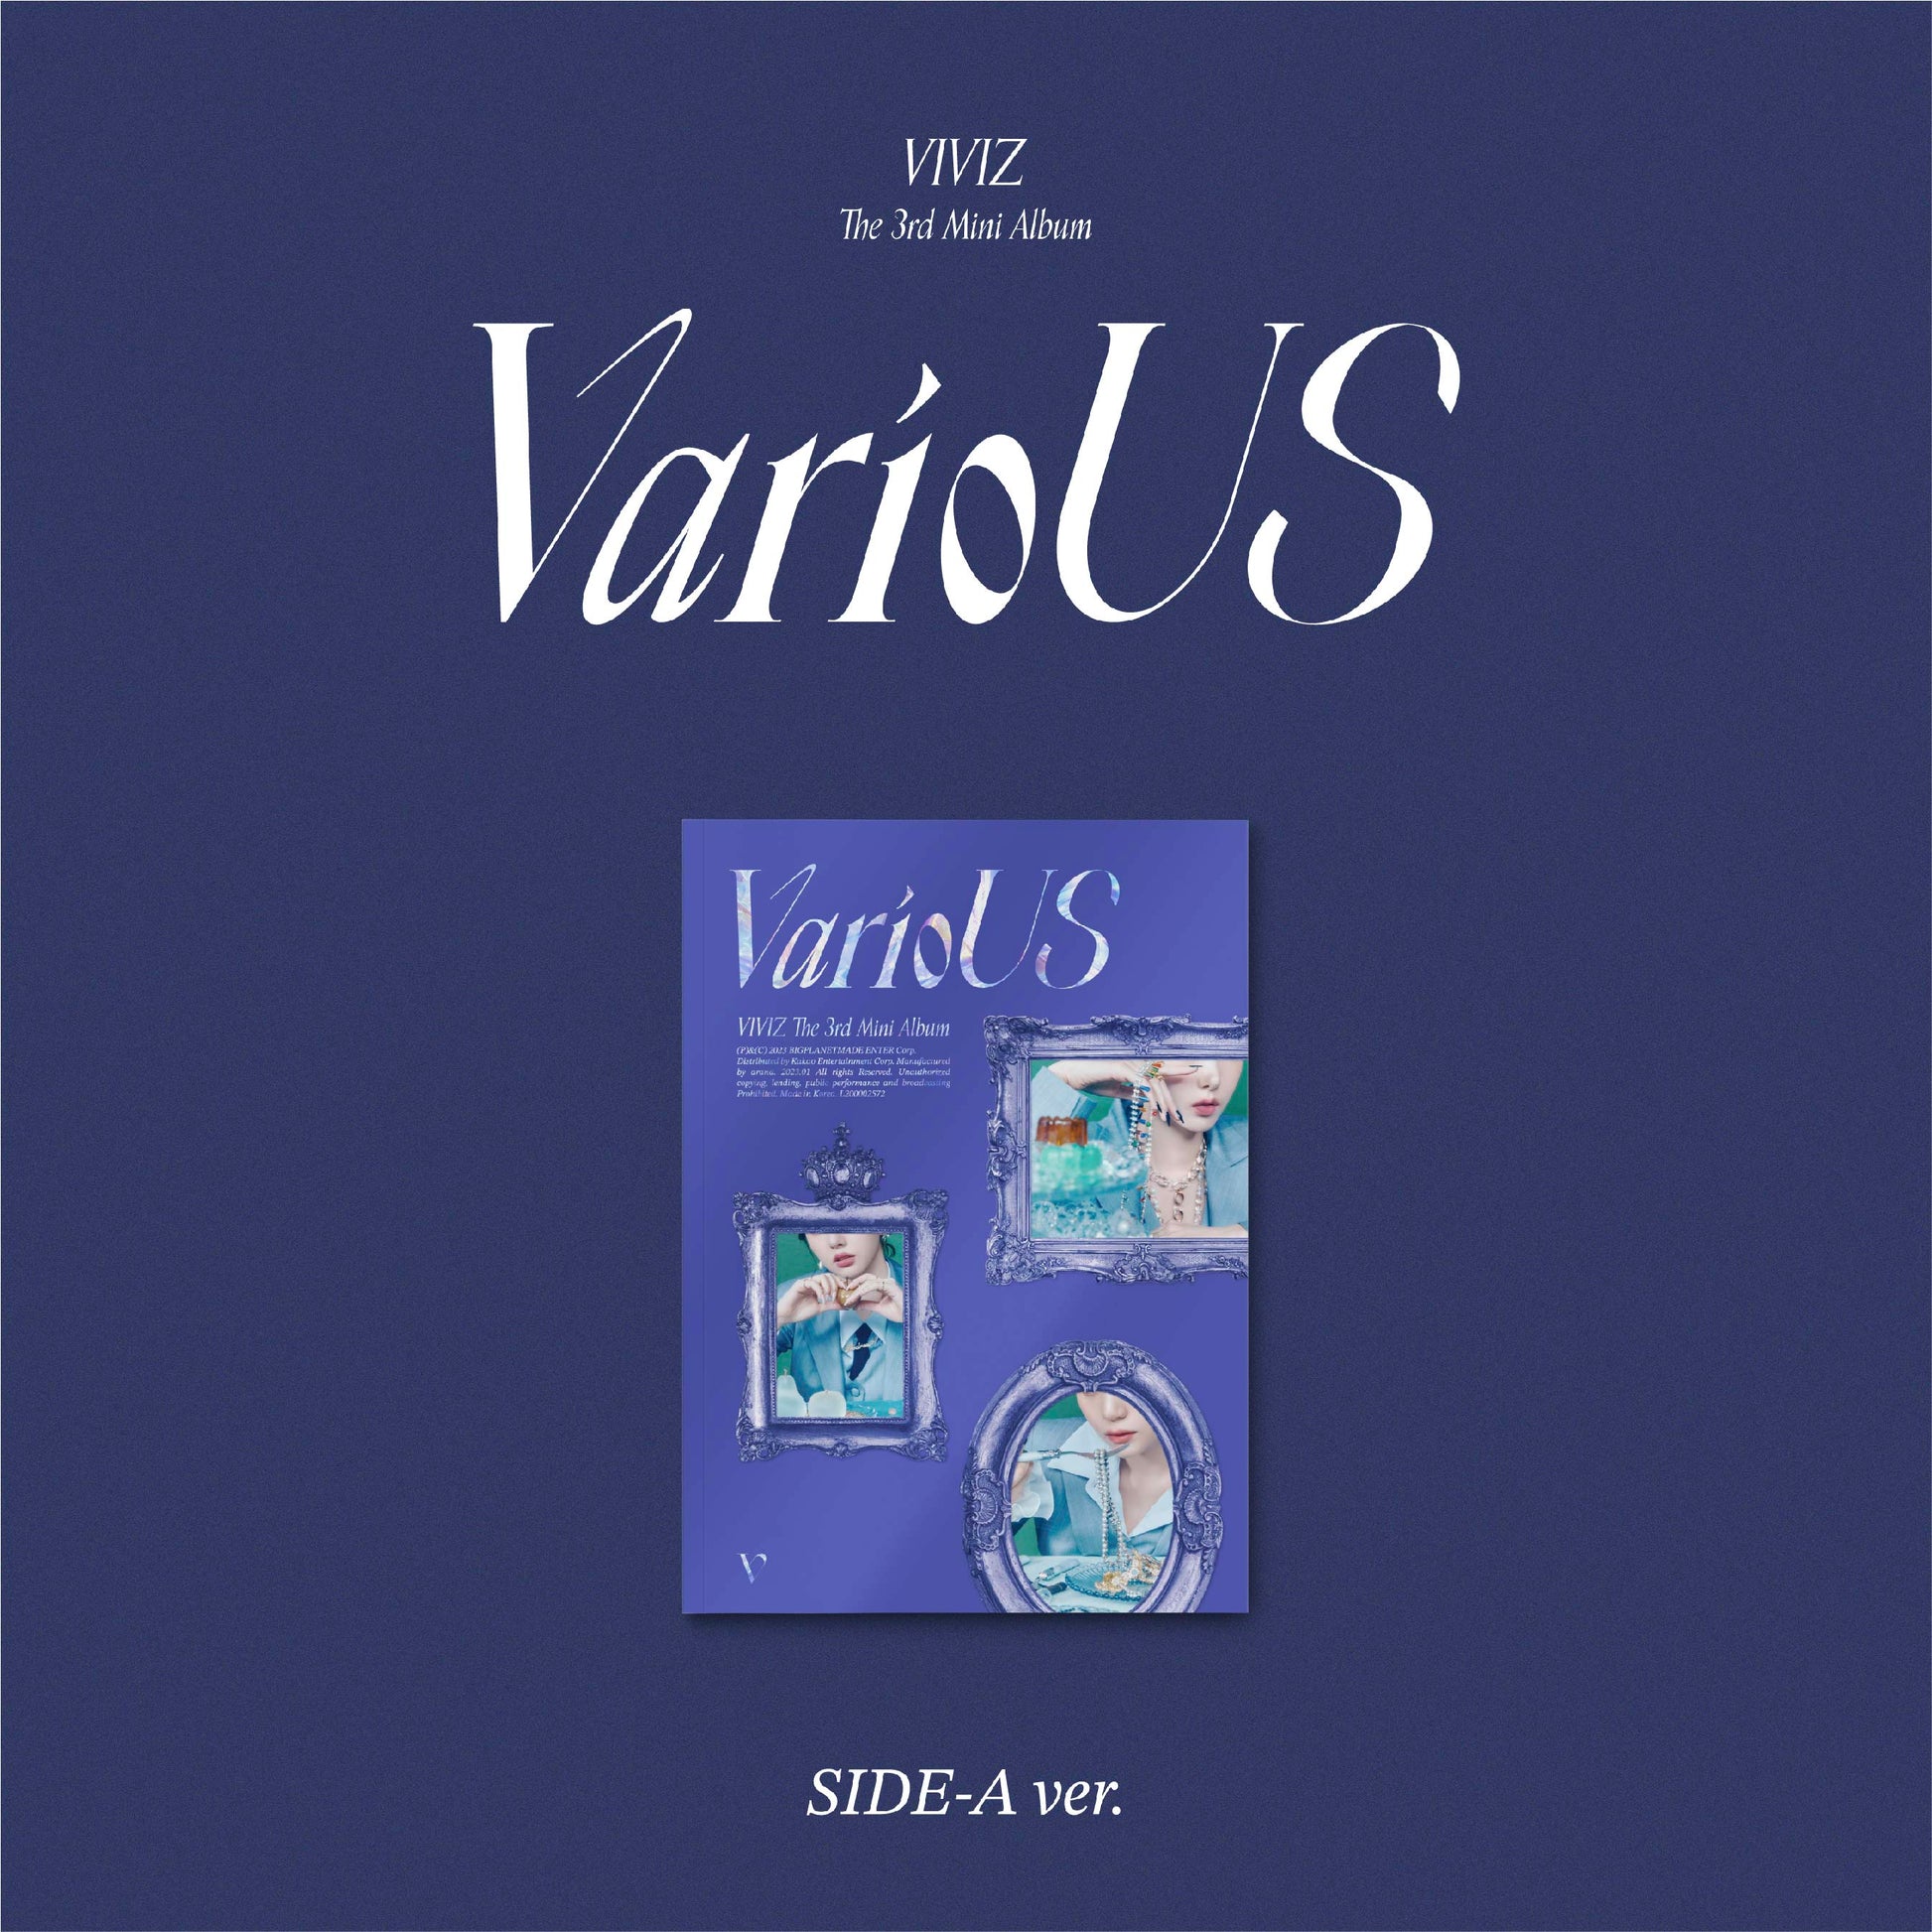 VIVIZ 3RD MINI ALBUM 'VARIOUS' (PHOTOBOOK) SIDE-A VERSION COVER